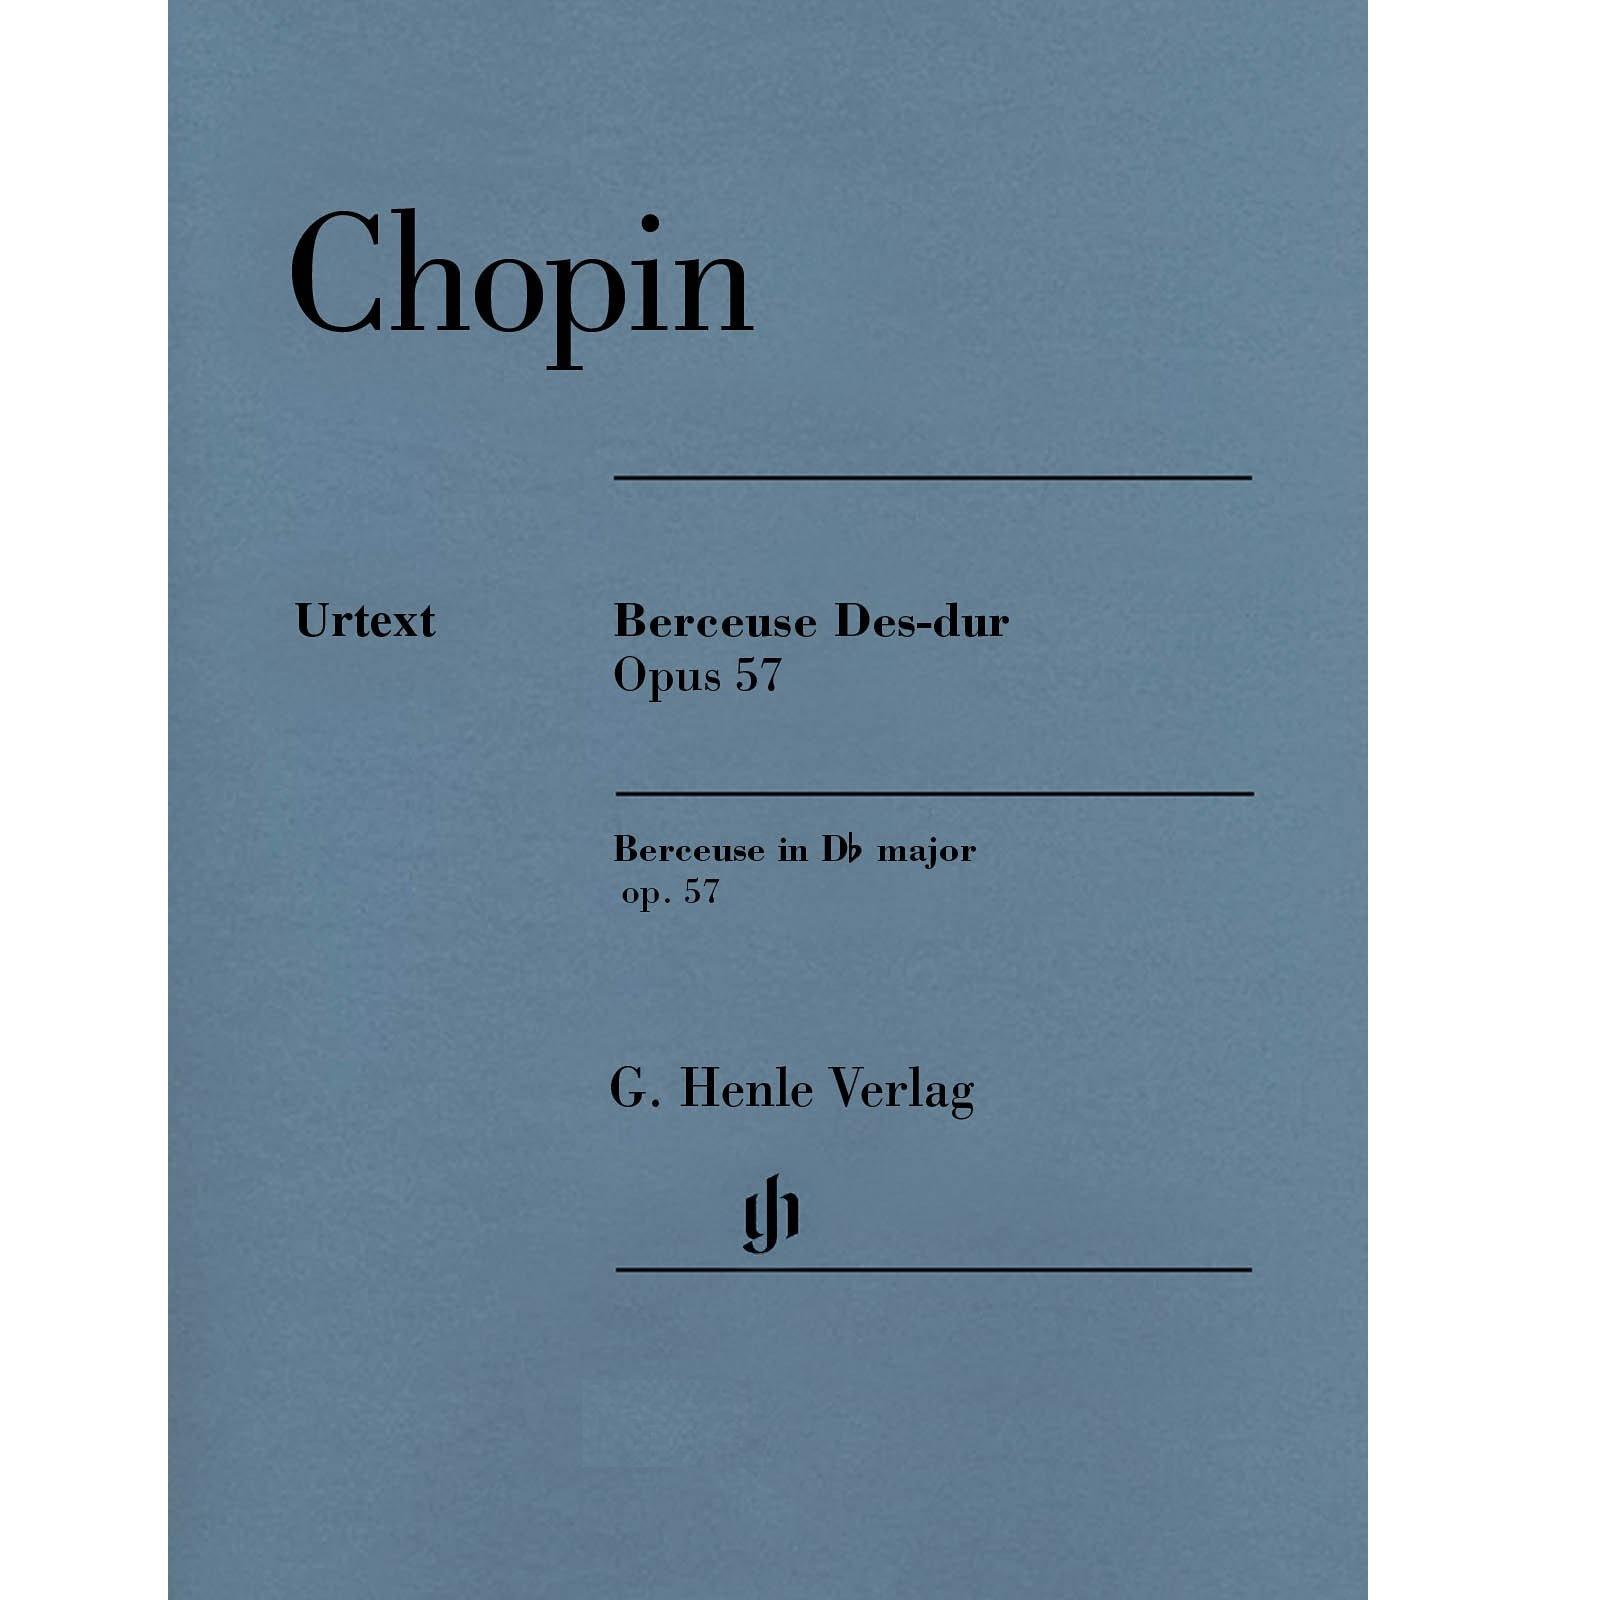 Chopin Berceuse Des-Dur Opus 57 Urtext - Verlag